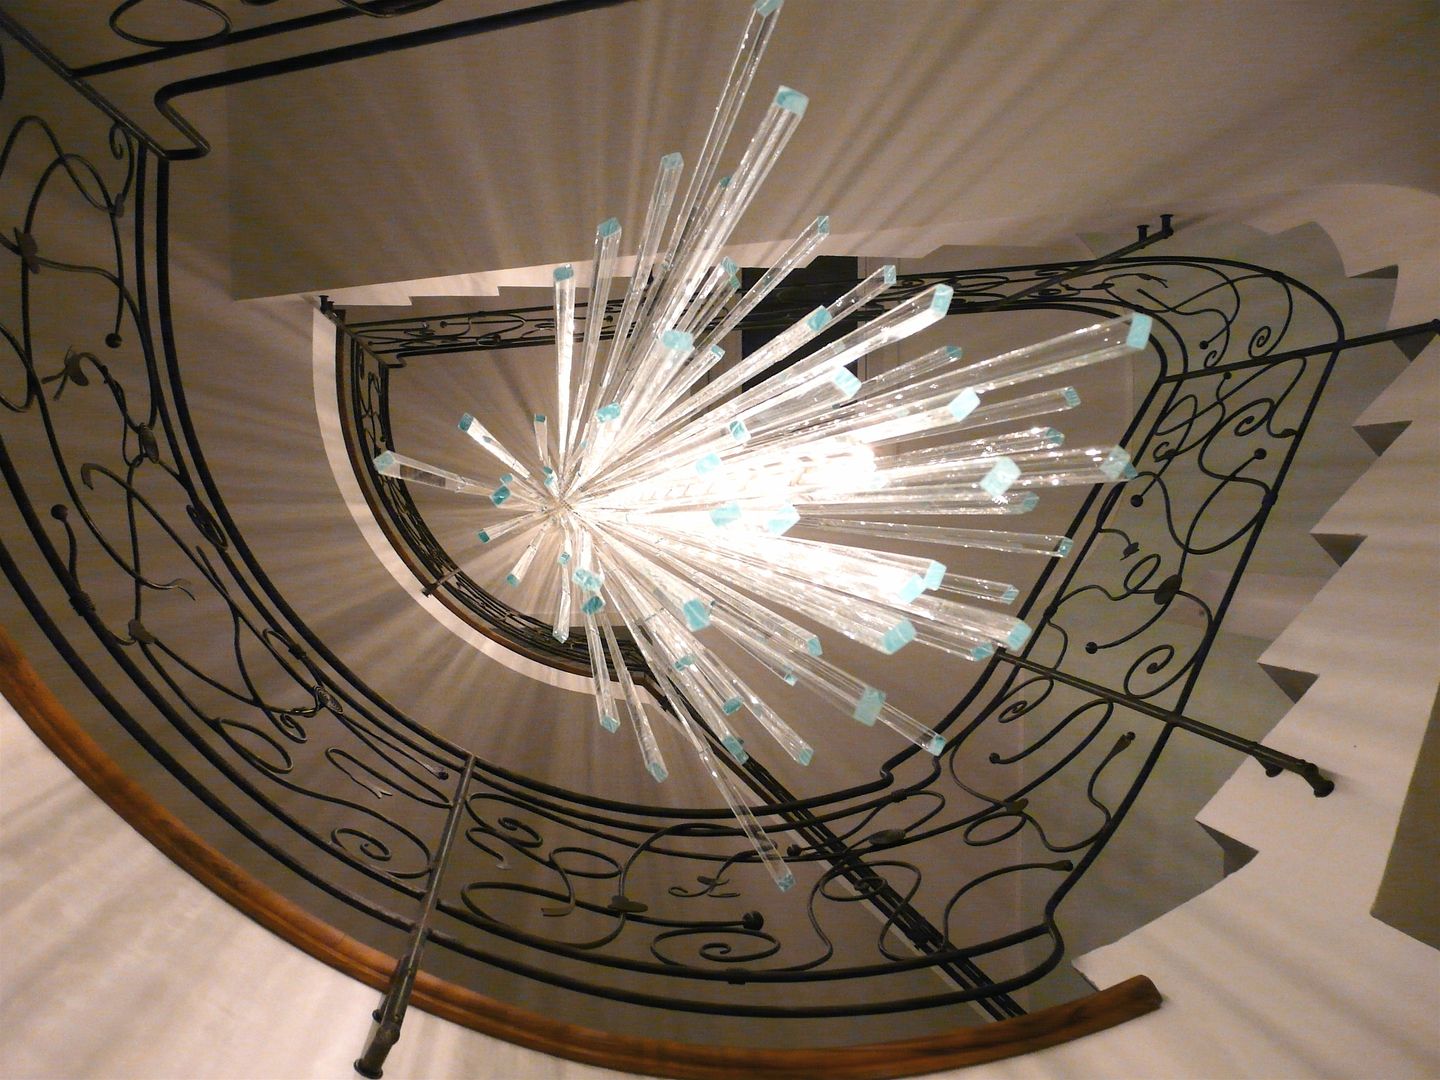 Art, Le Meduse s.a.s. Le Meduse s.a.s. Eclectic style corridor, hallway & stairs Lighting